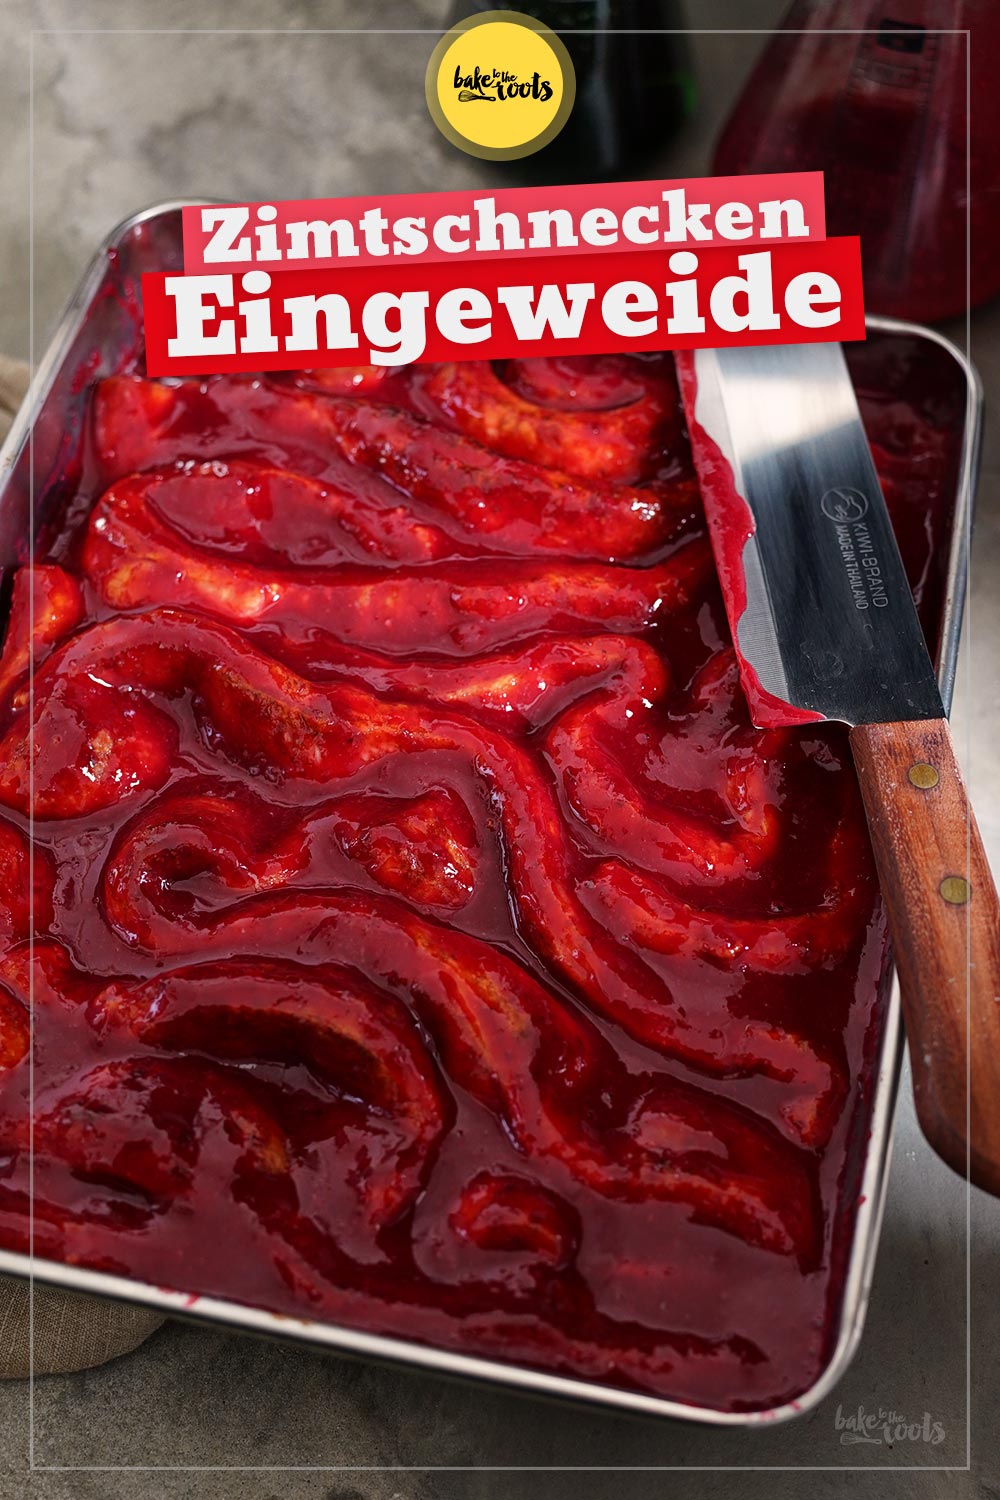 Halloween "Eingeweide" Cinnamon Rolls | Bake to the roots